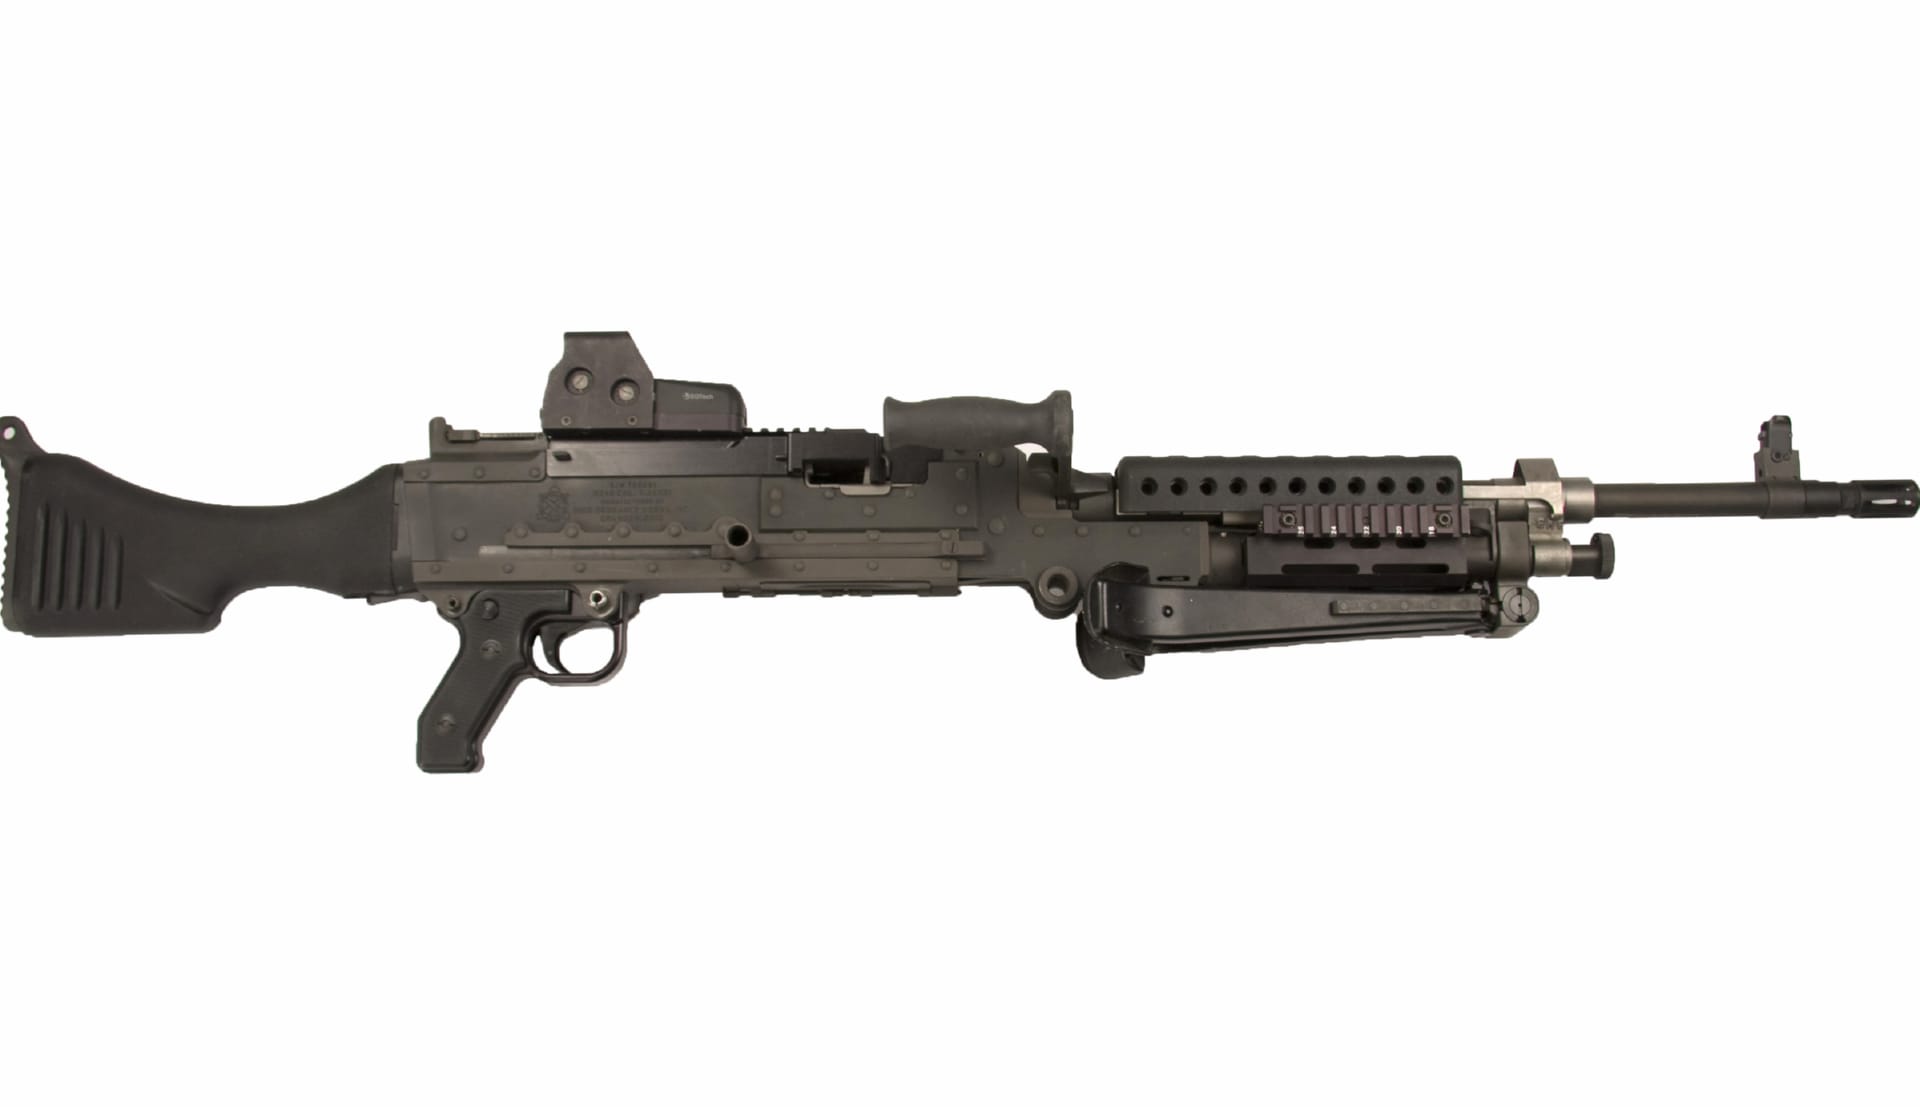 M240 machine gun at 1024 x 768 size wallpapers HD quality